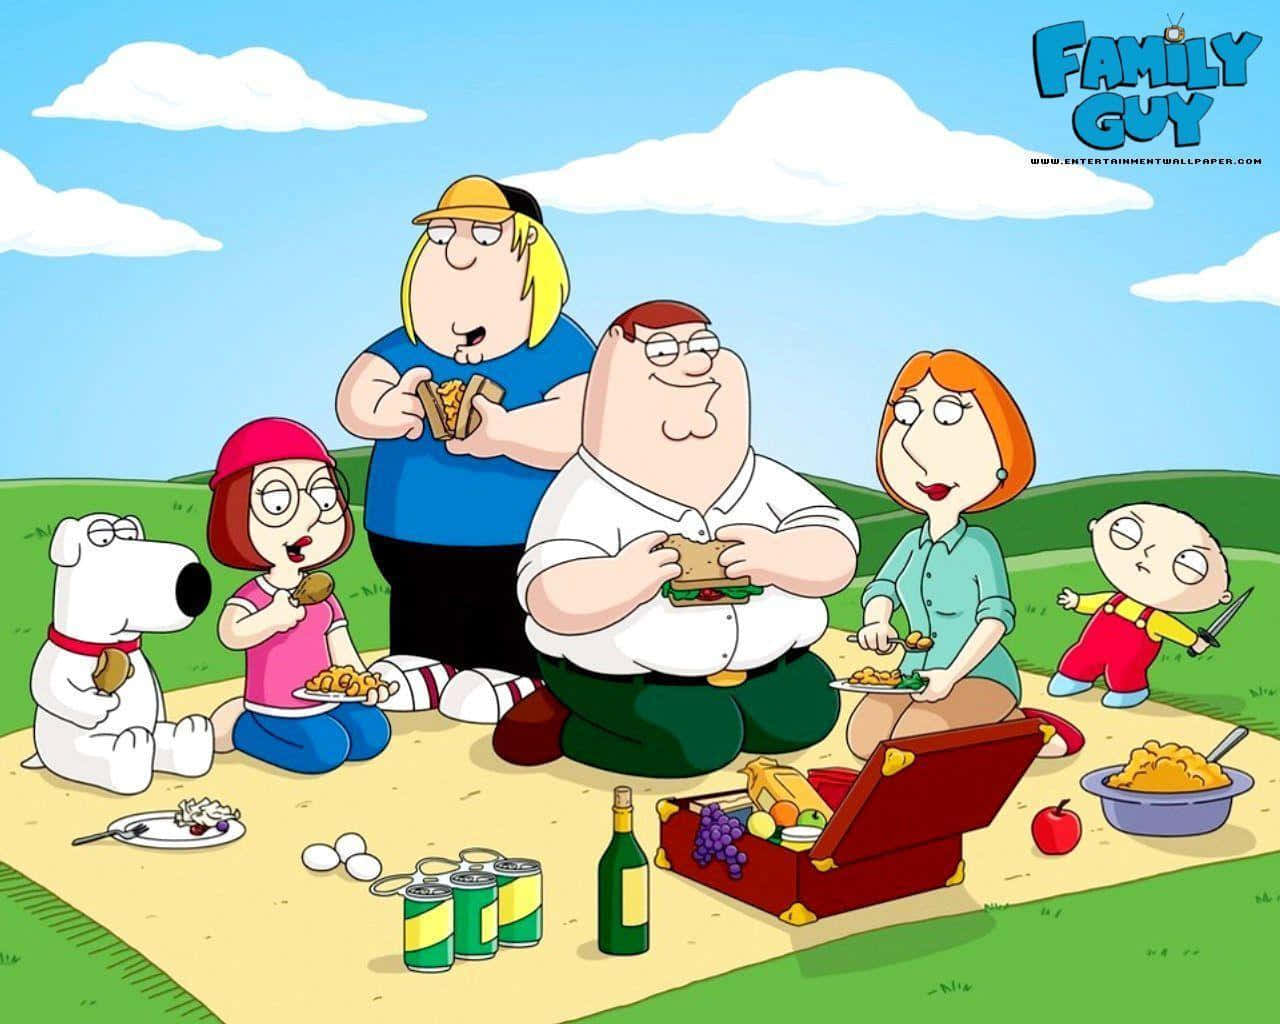 Petergriffin, Das Legendäre Family Guy